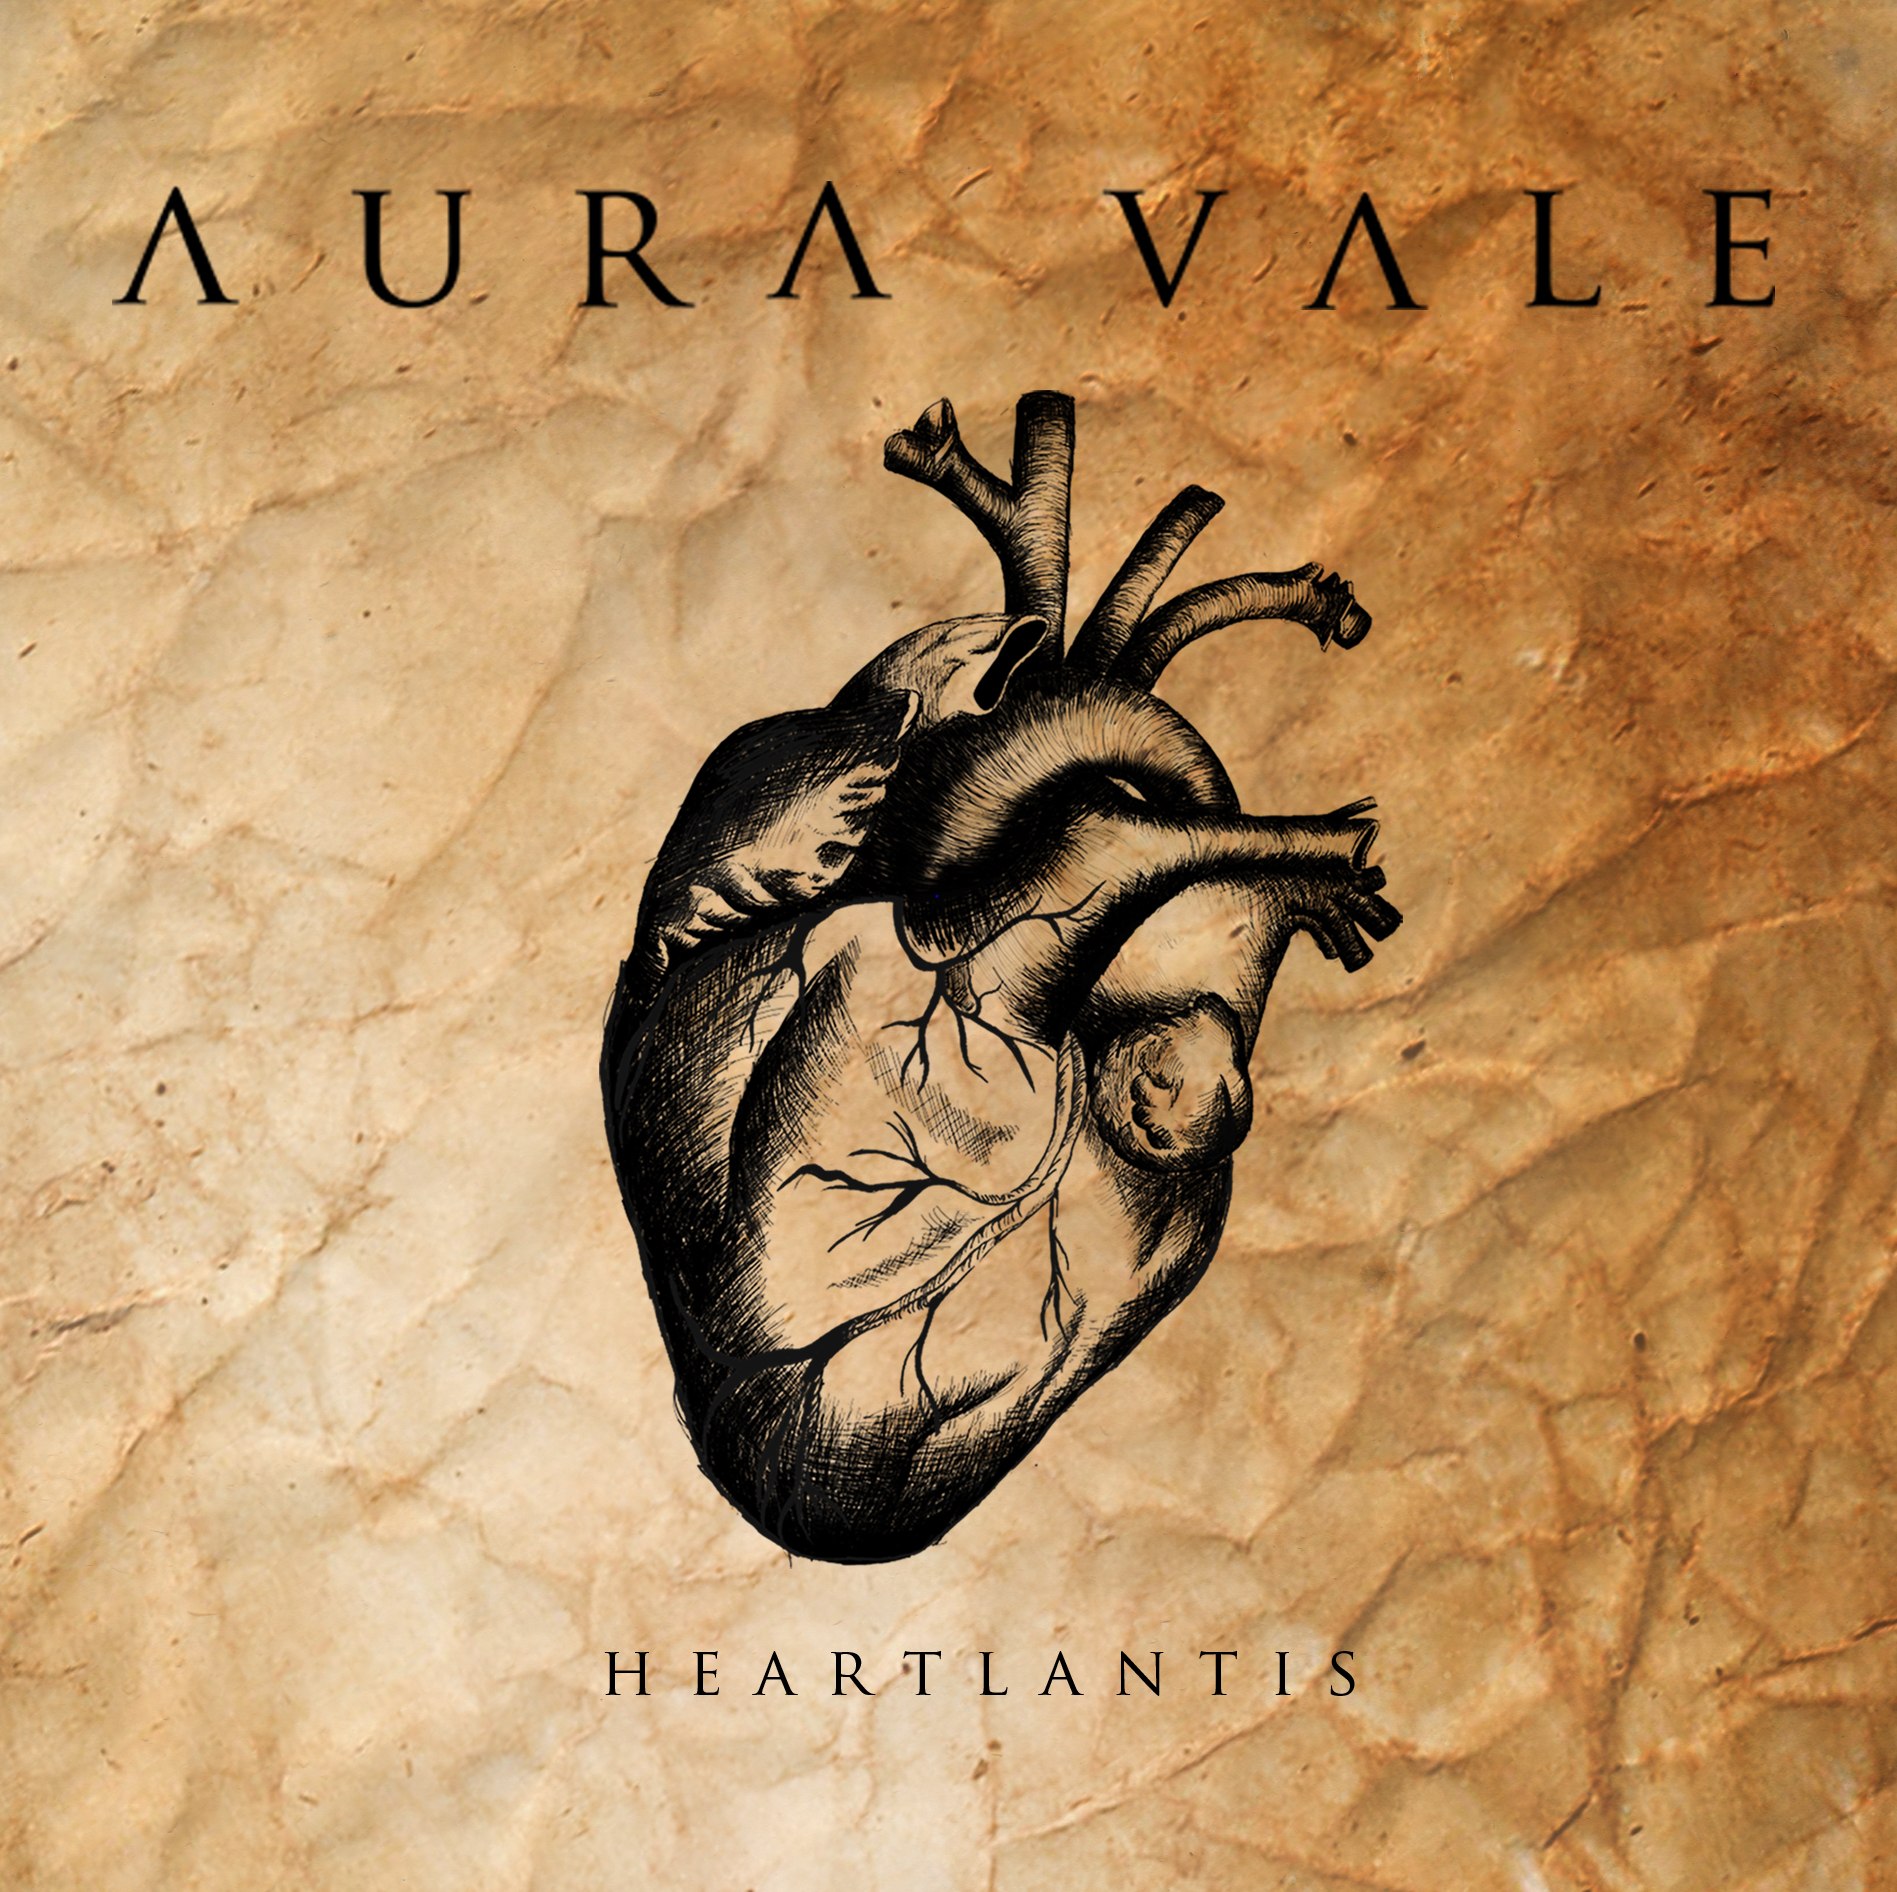 Aura Vale - Heartlantis (2012)